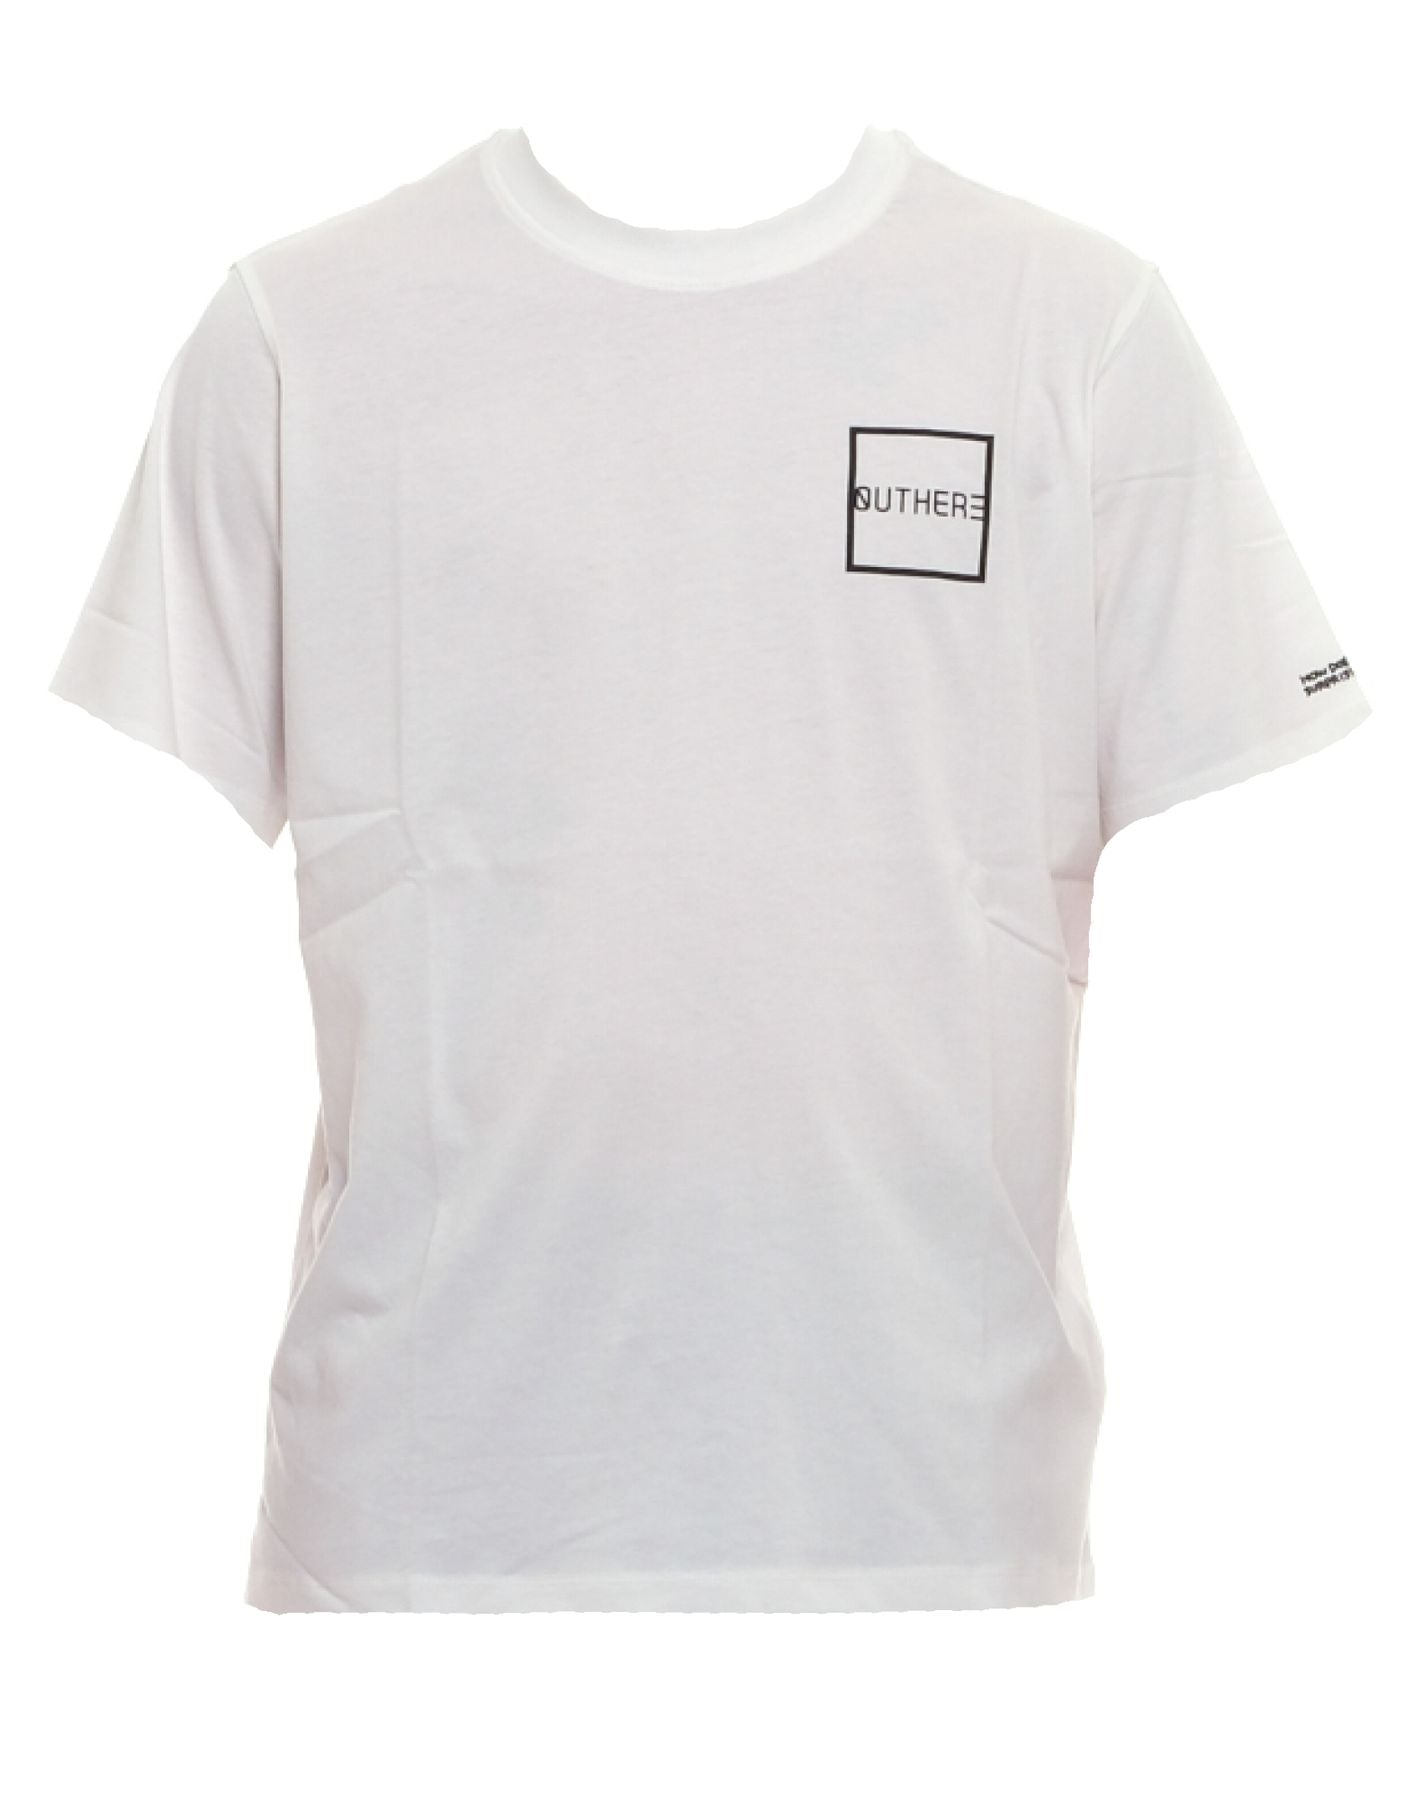 T-Shirt für Mann EOTM136AG95 Weiß OUTHERE